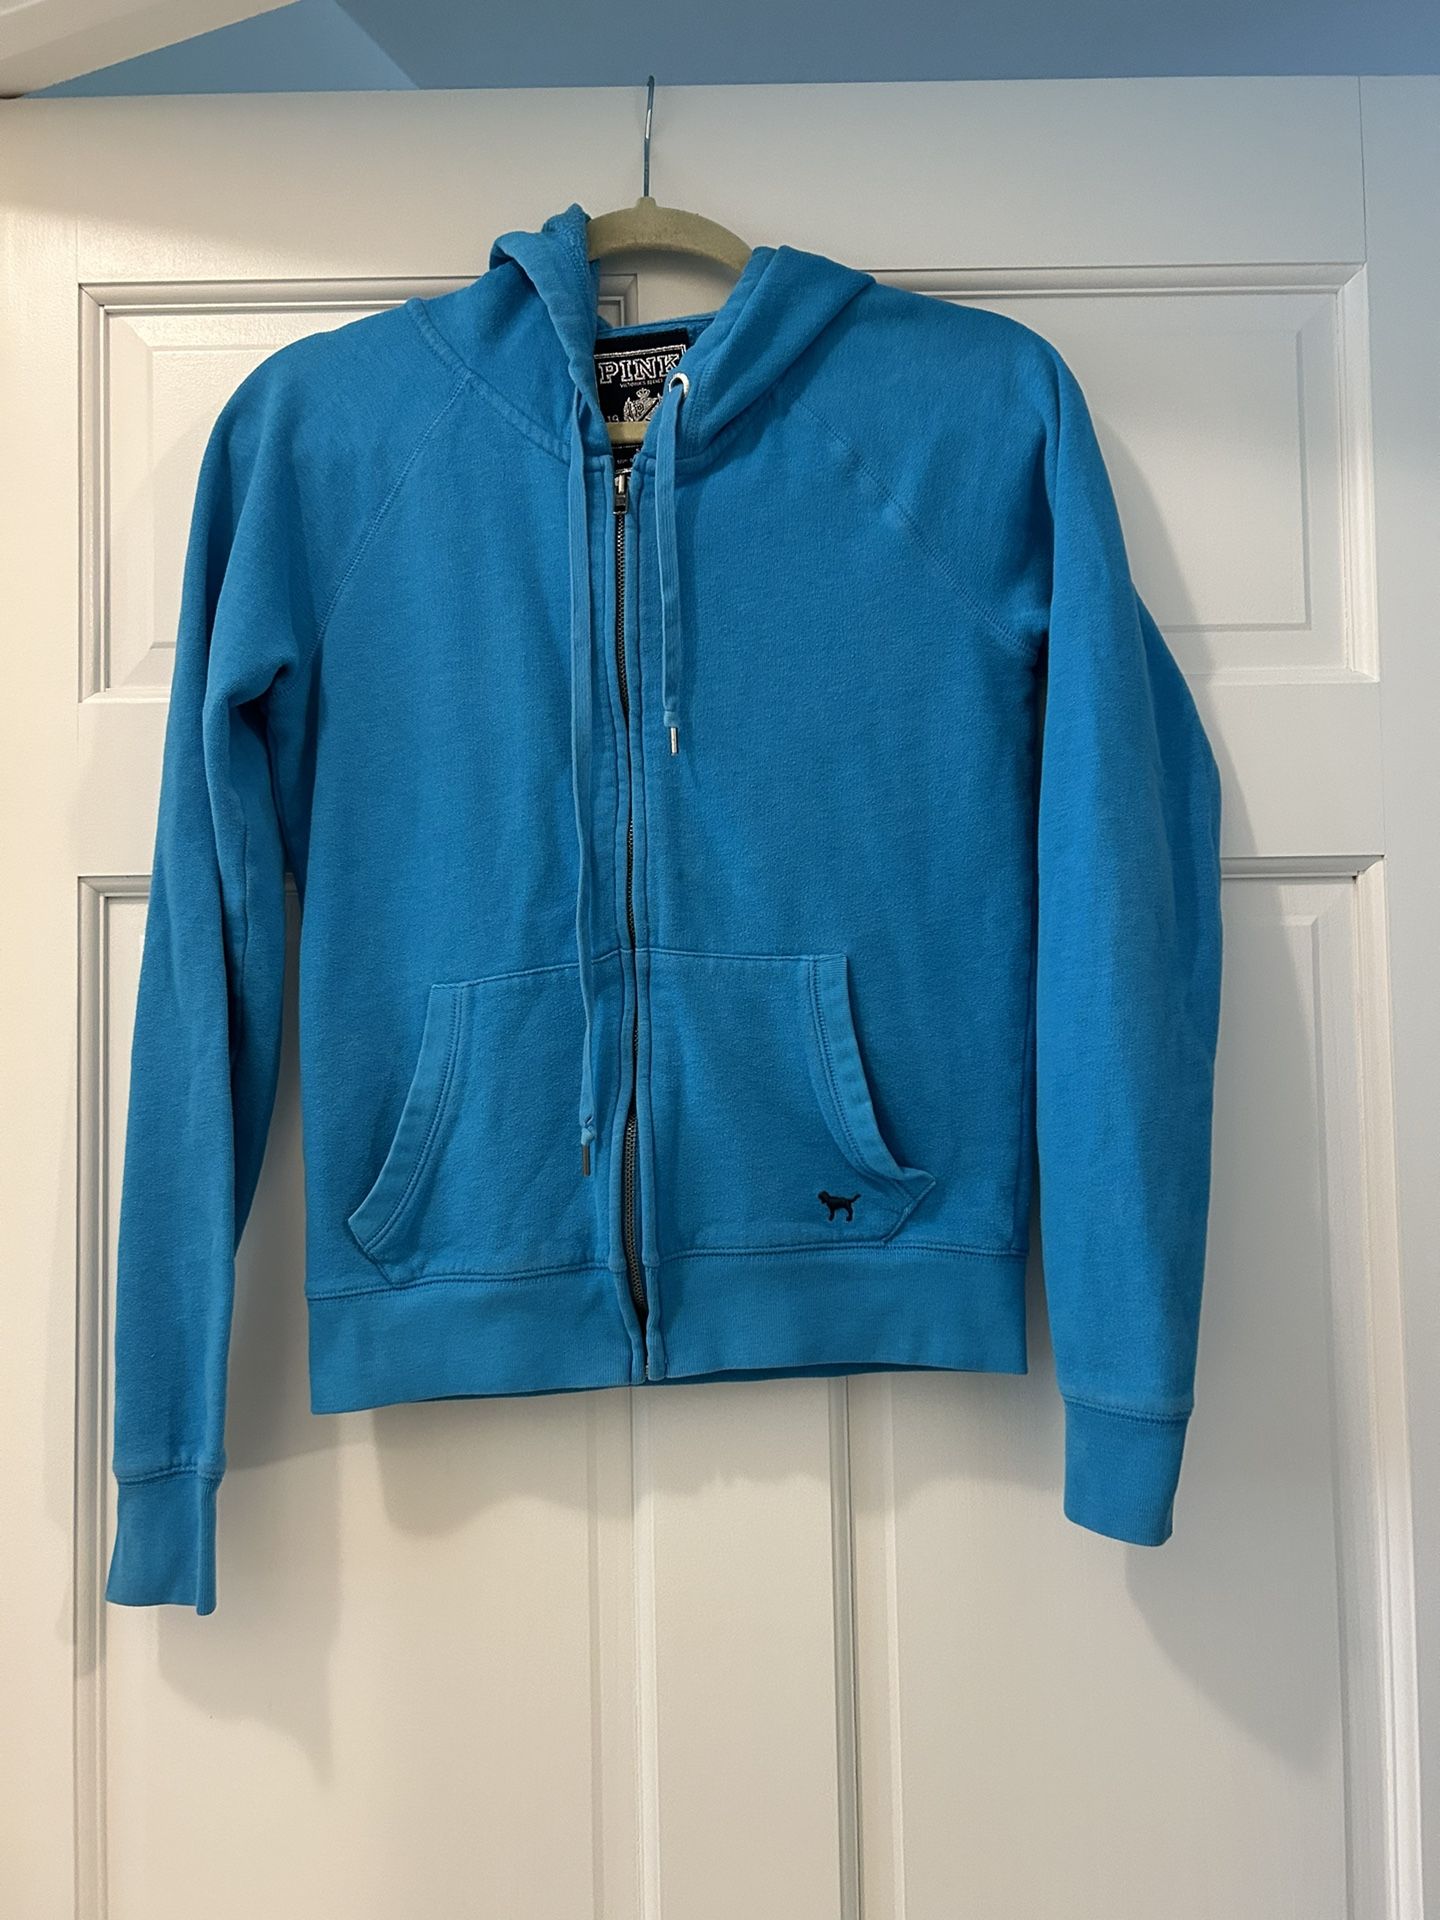 Pink unisex hoodie jacket zip up, size S, color blue